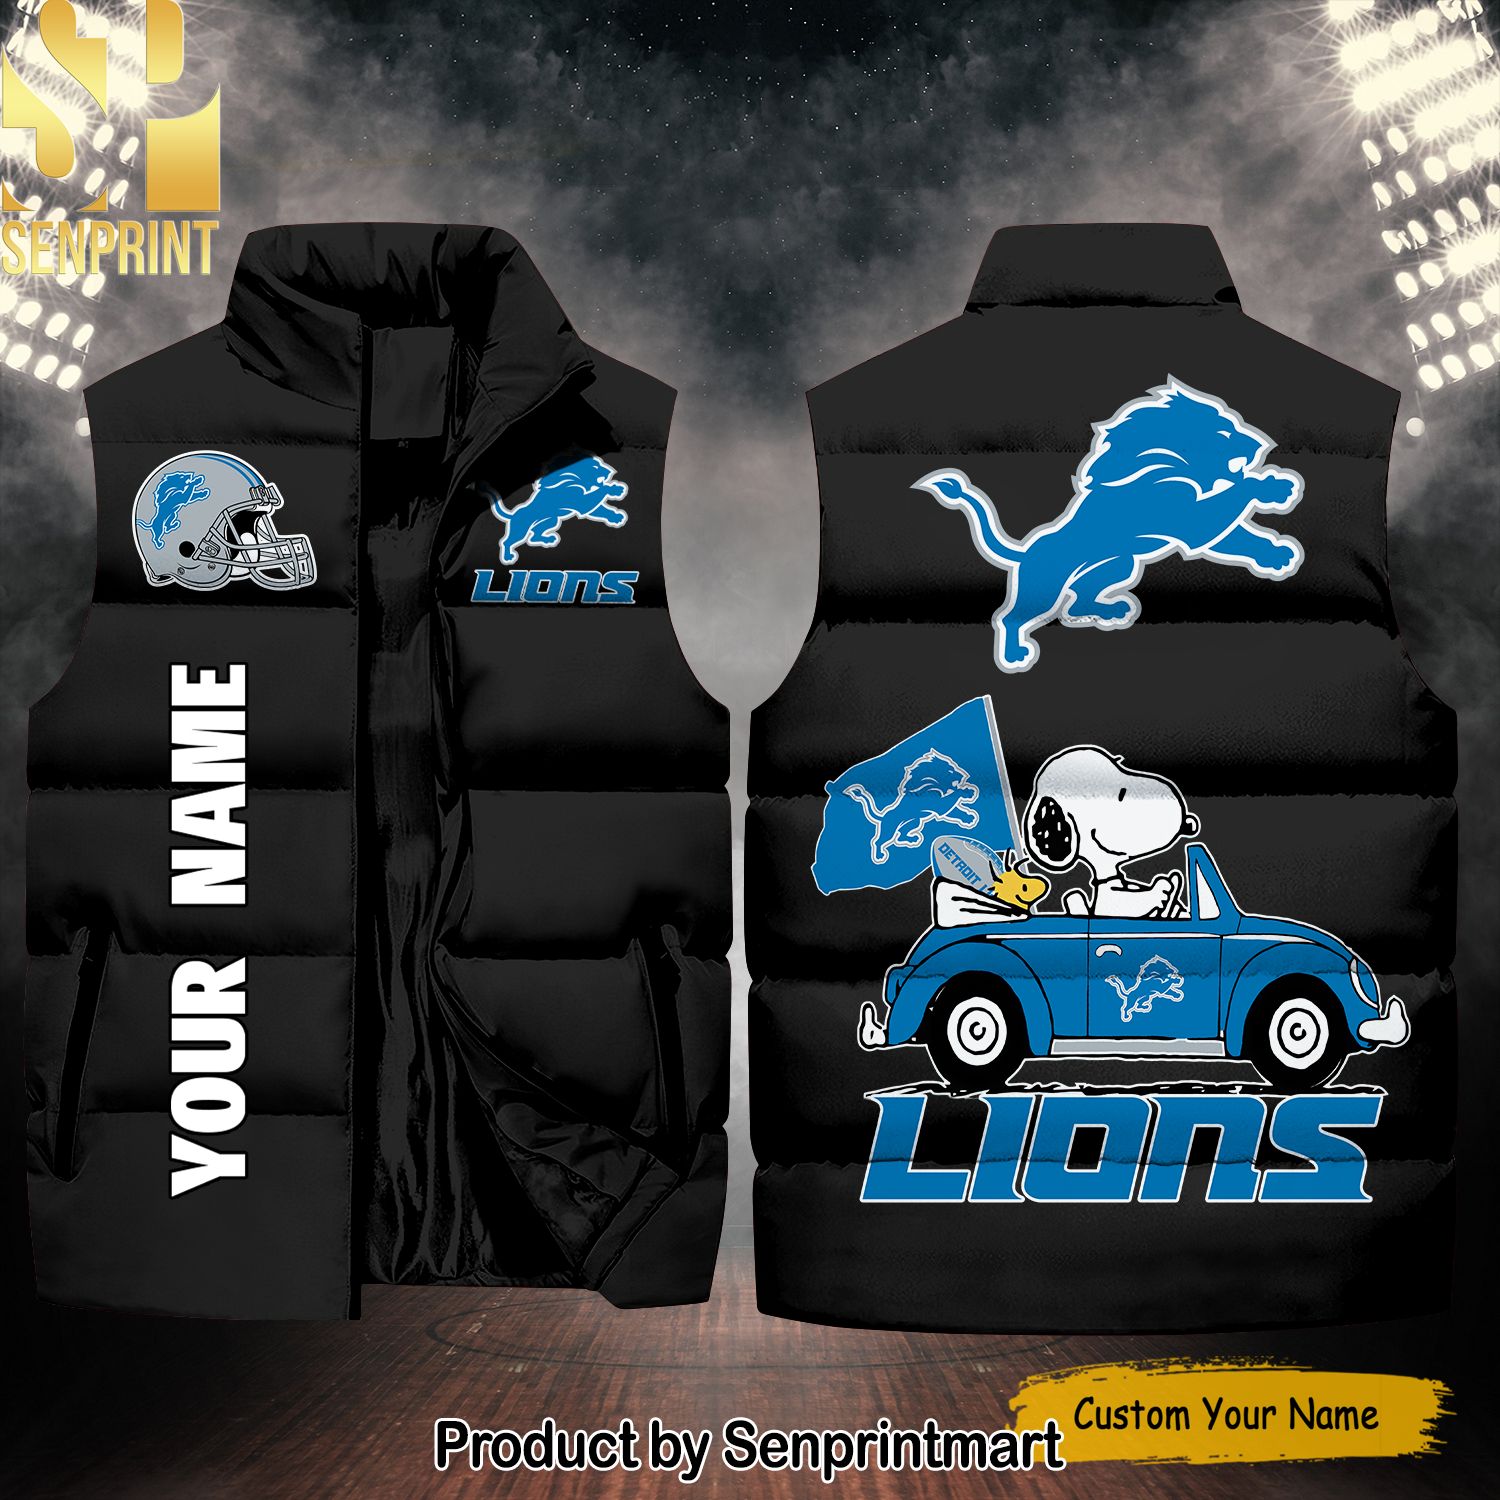 National Football League Detroit Lions Peanuts Snoopy High Fashion Sleeveless Jacket